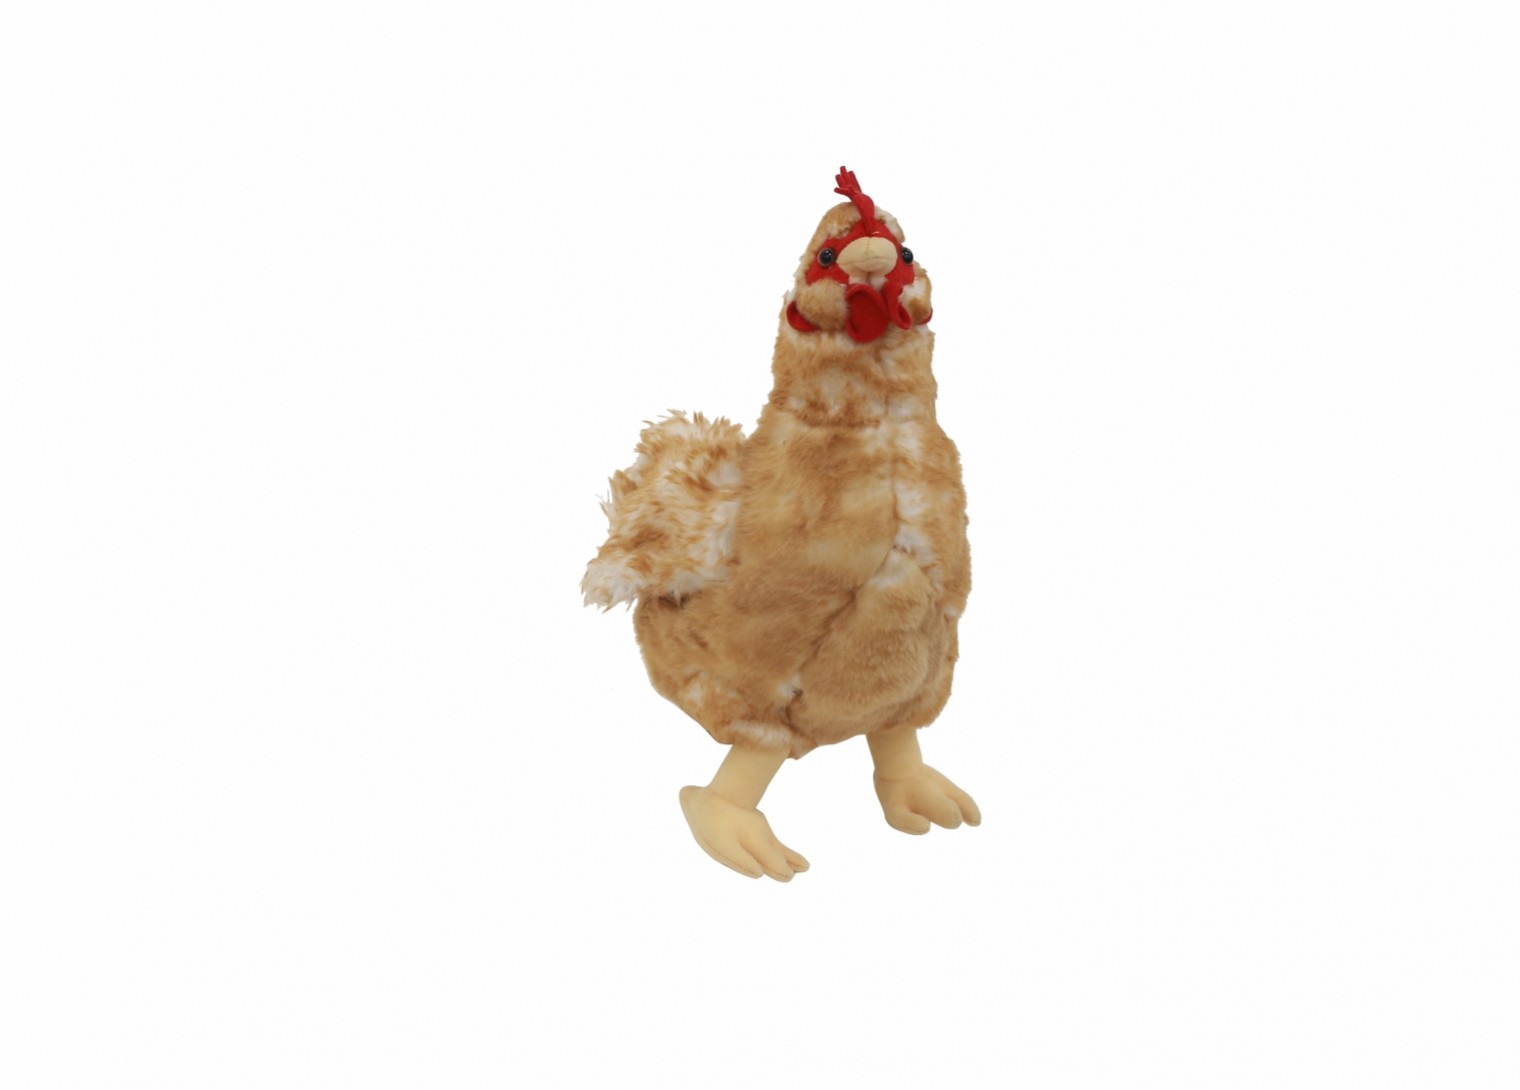 Happy Farming - The Family Chicken 14 Piece Set